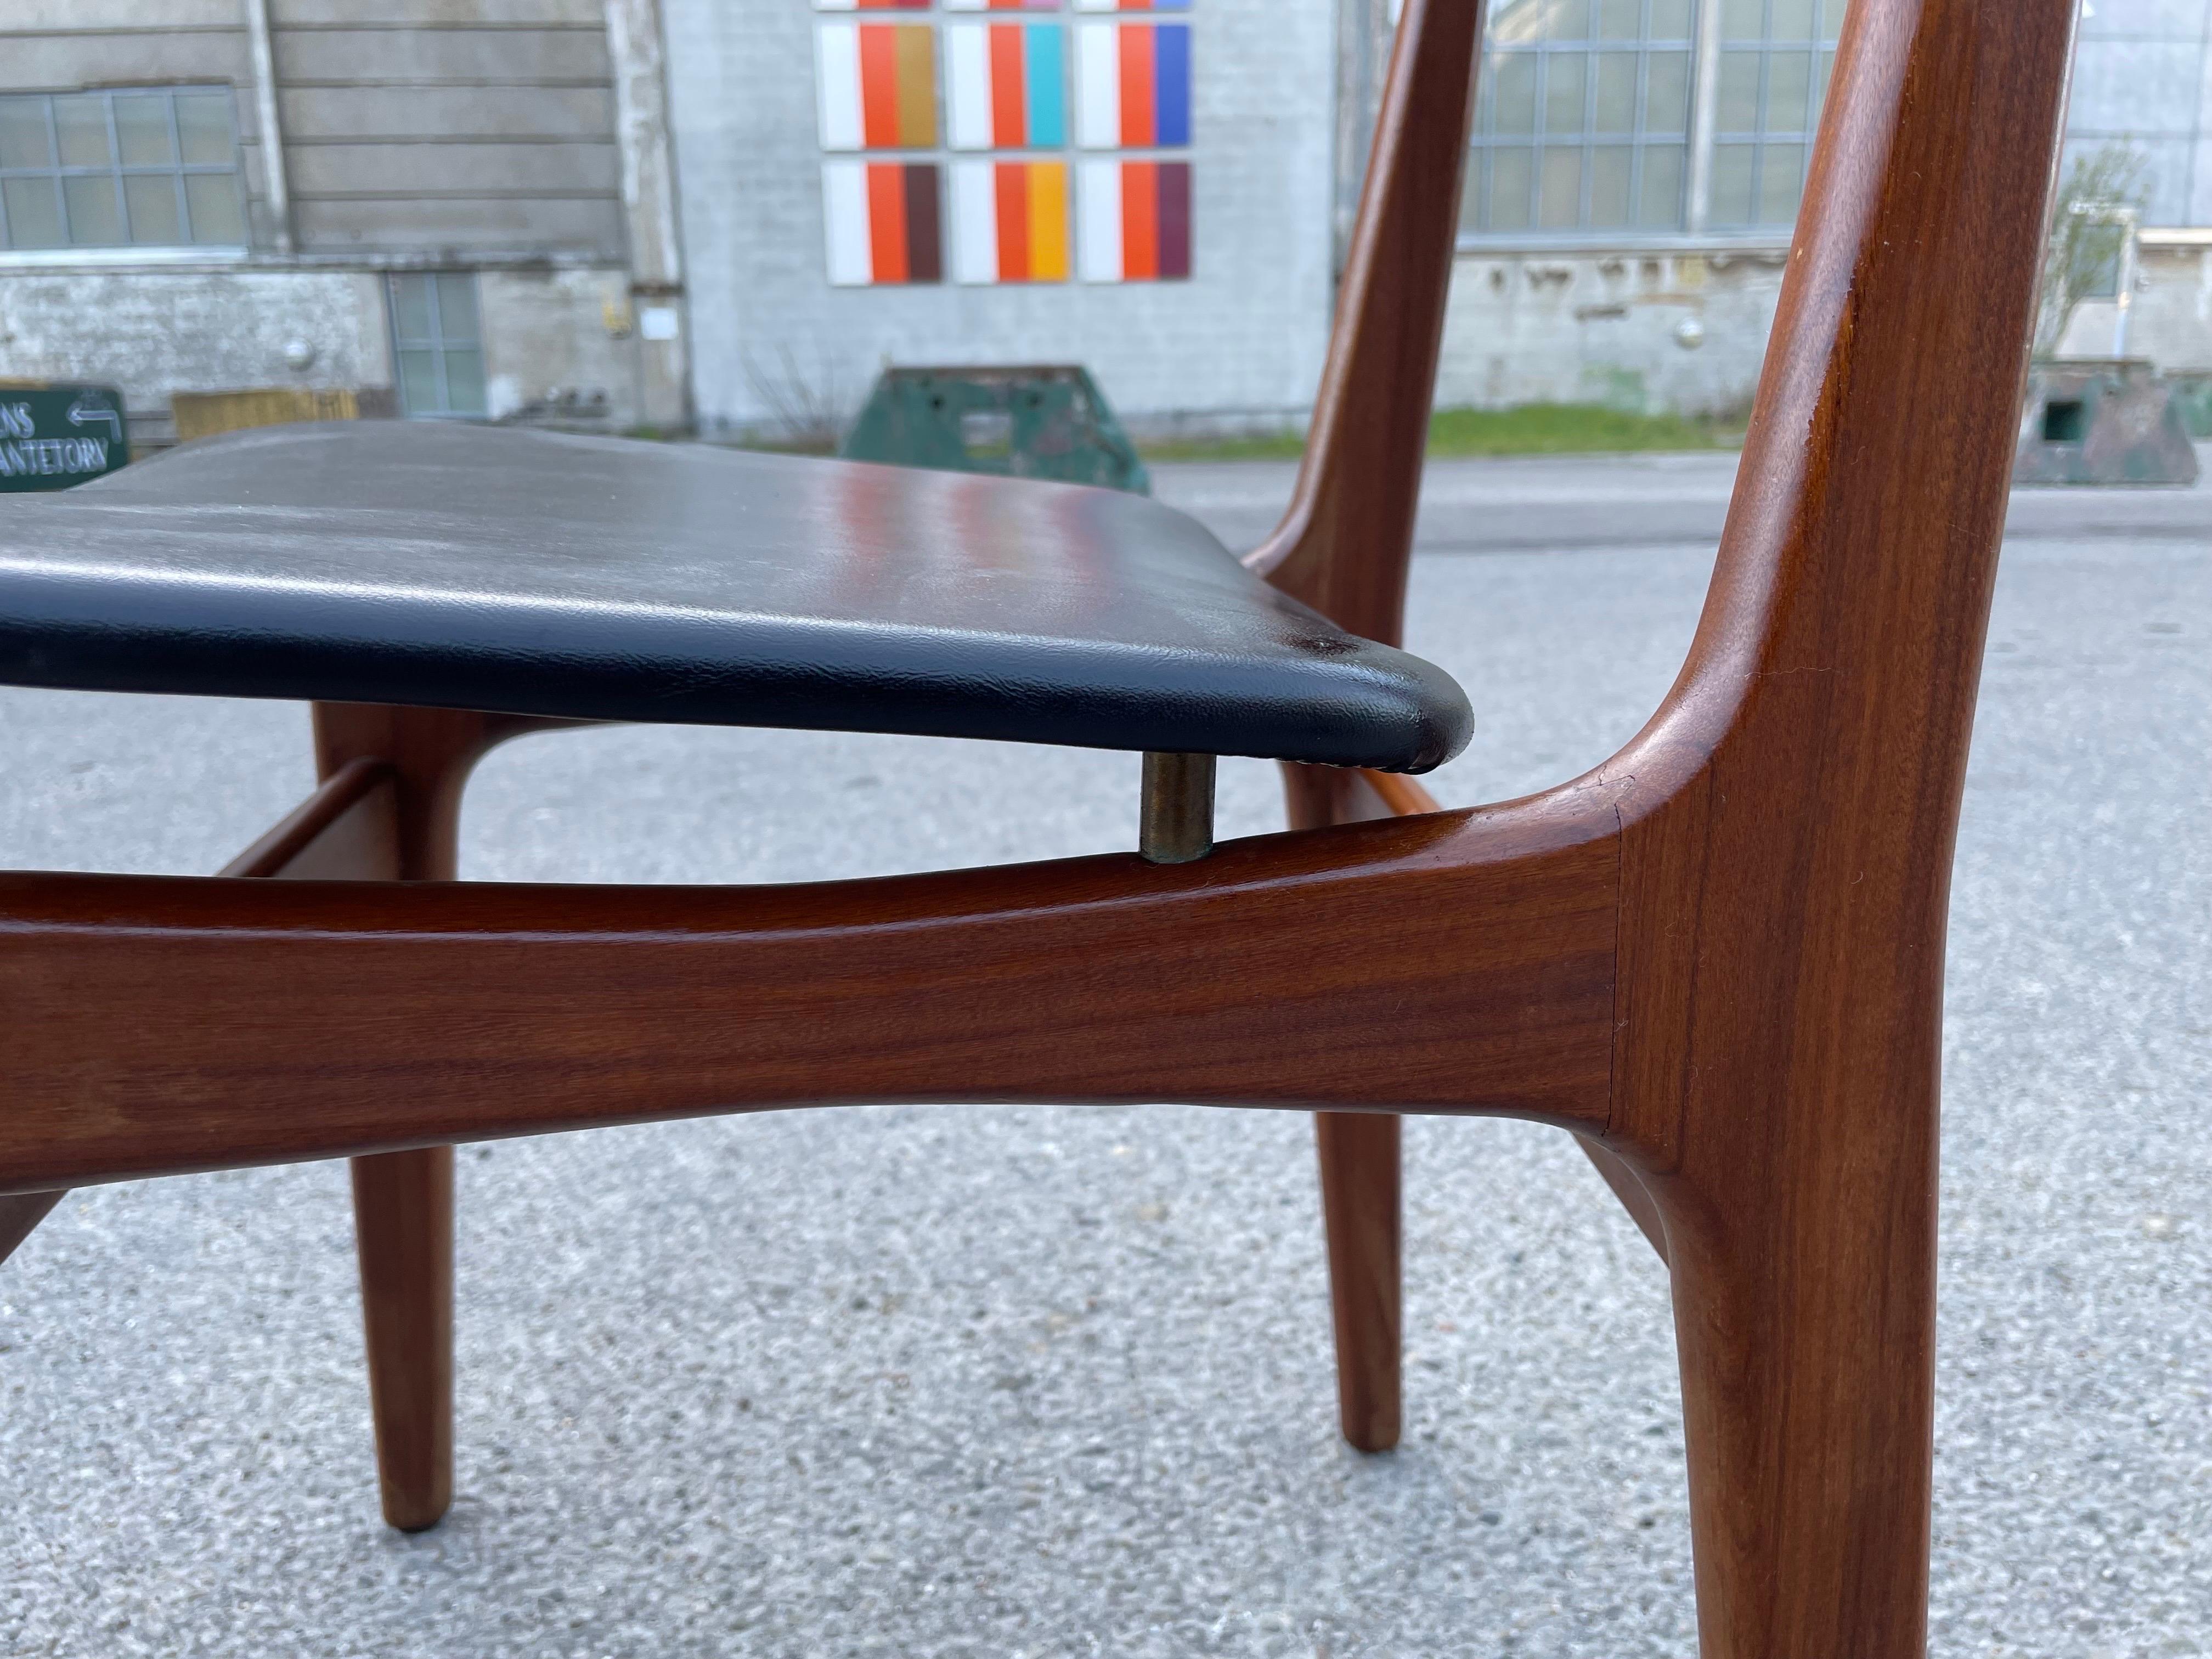 Set of 6 Midcentury Danish Chairs in Teak by Schiønning & Elgaard, 1960s For Sale 5